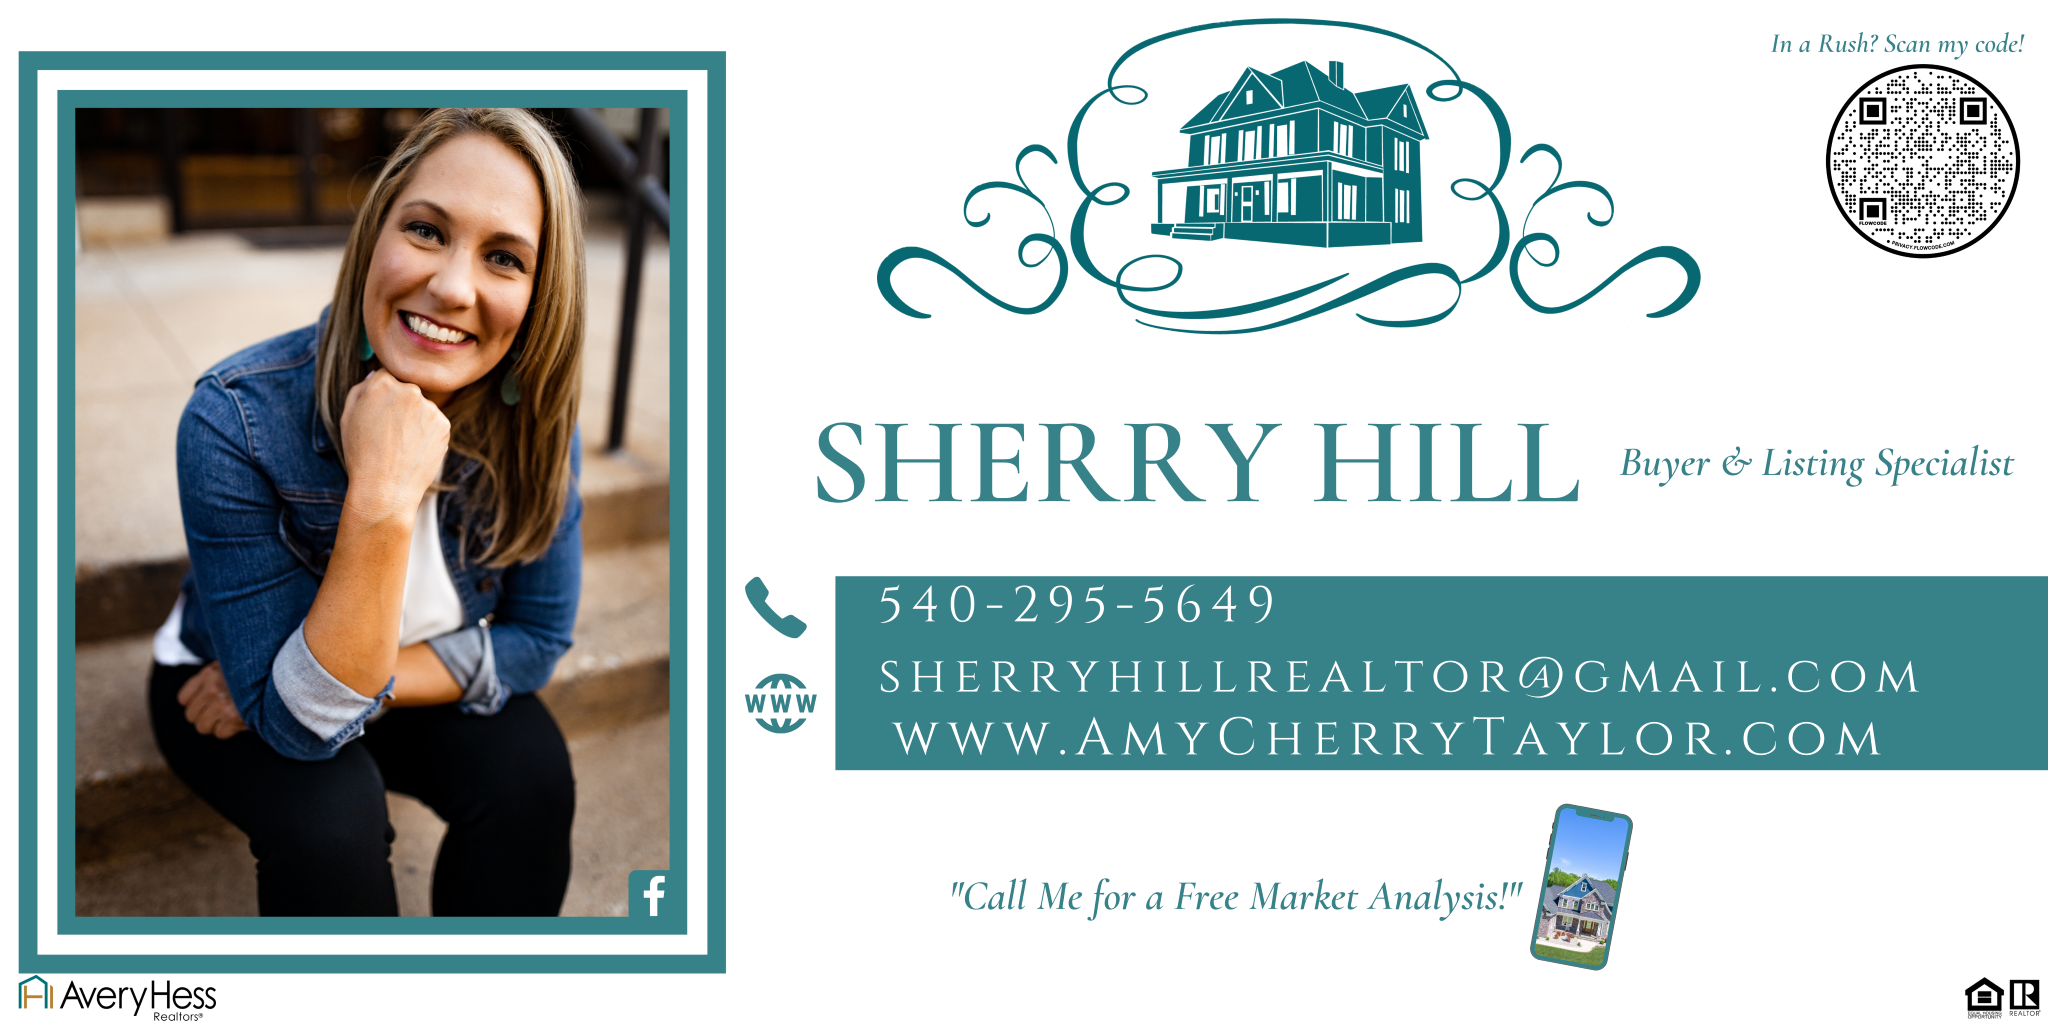 Sherry Hill Realtor